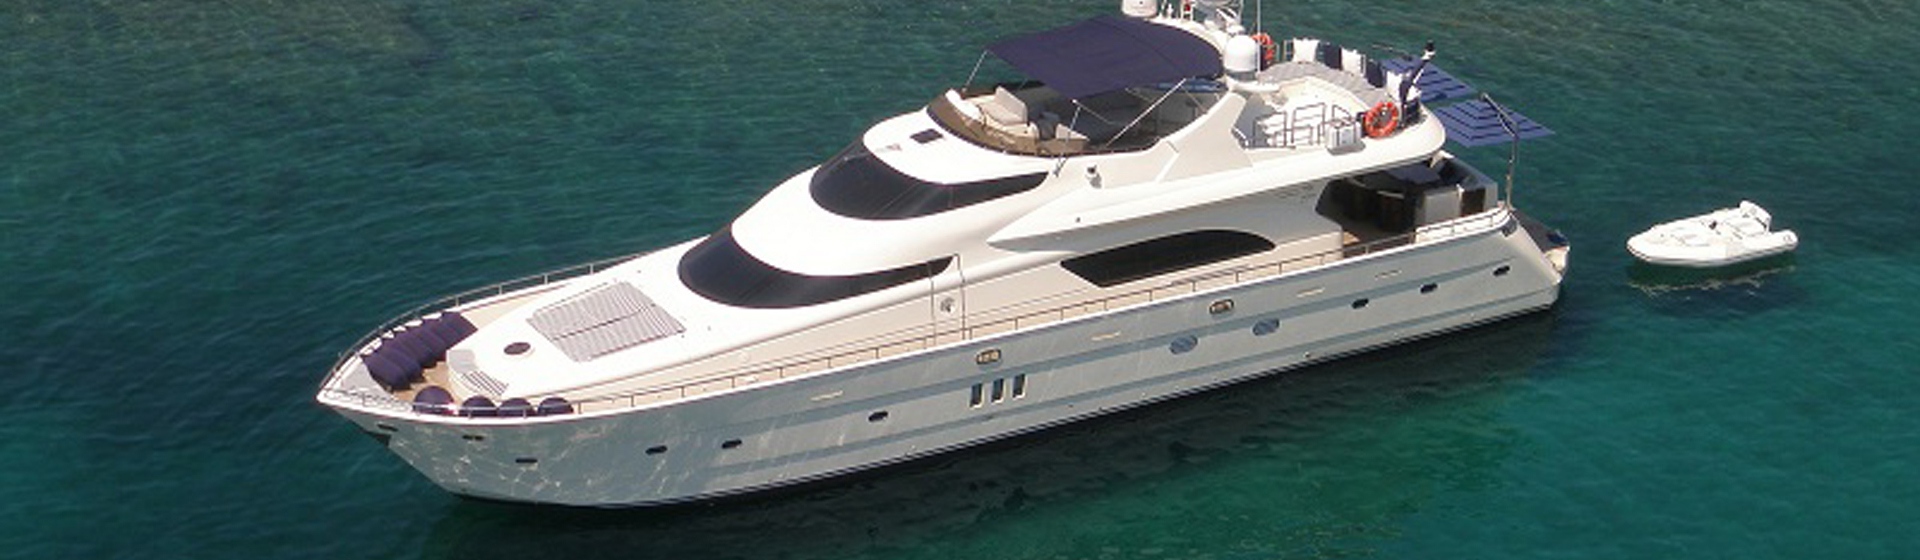 Luxury Motor Yacht charter south corsica De birs 86